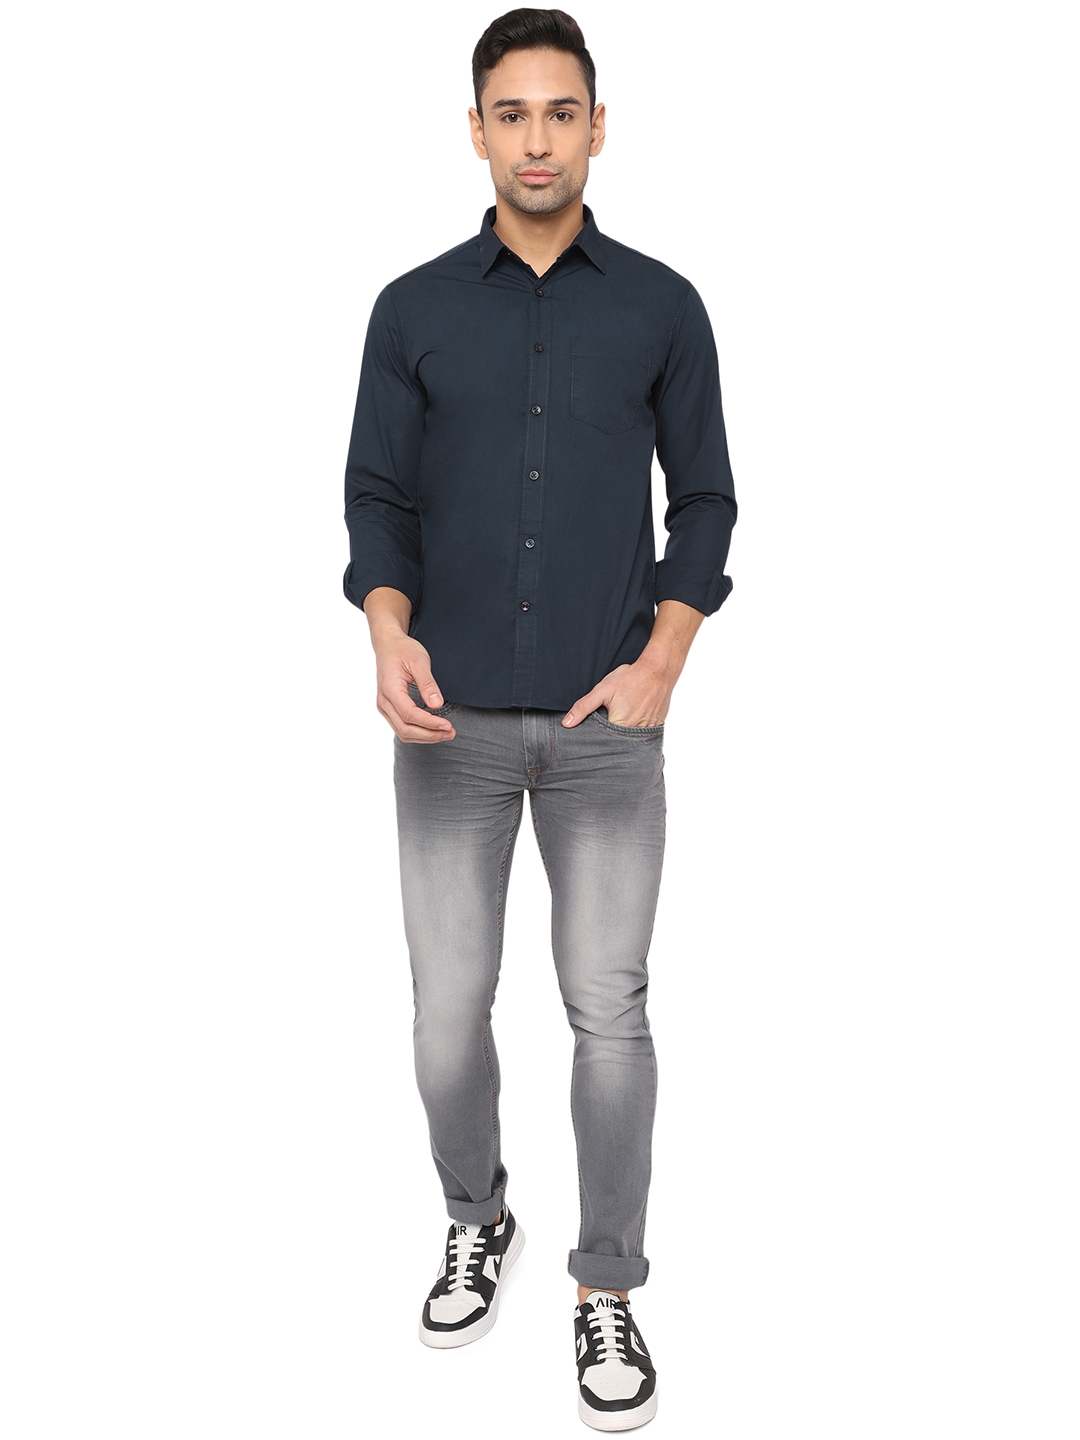 Greenfibre | Dress Blue Solid Slim Fit Semi Casual Shirt | Greenfibre 3